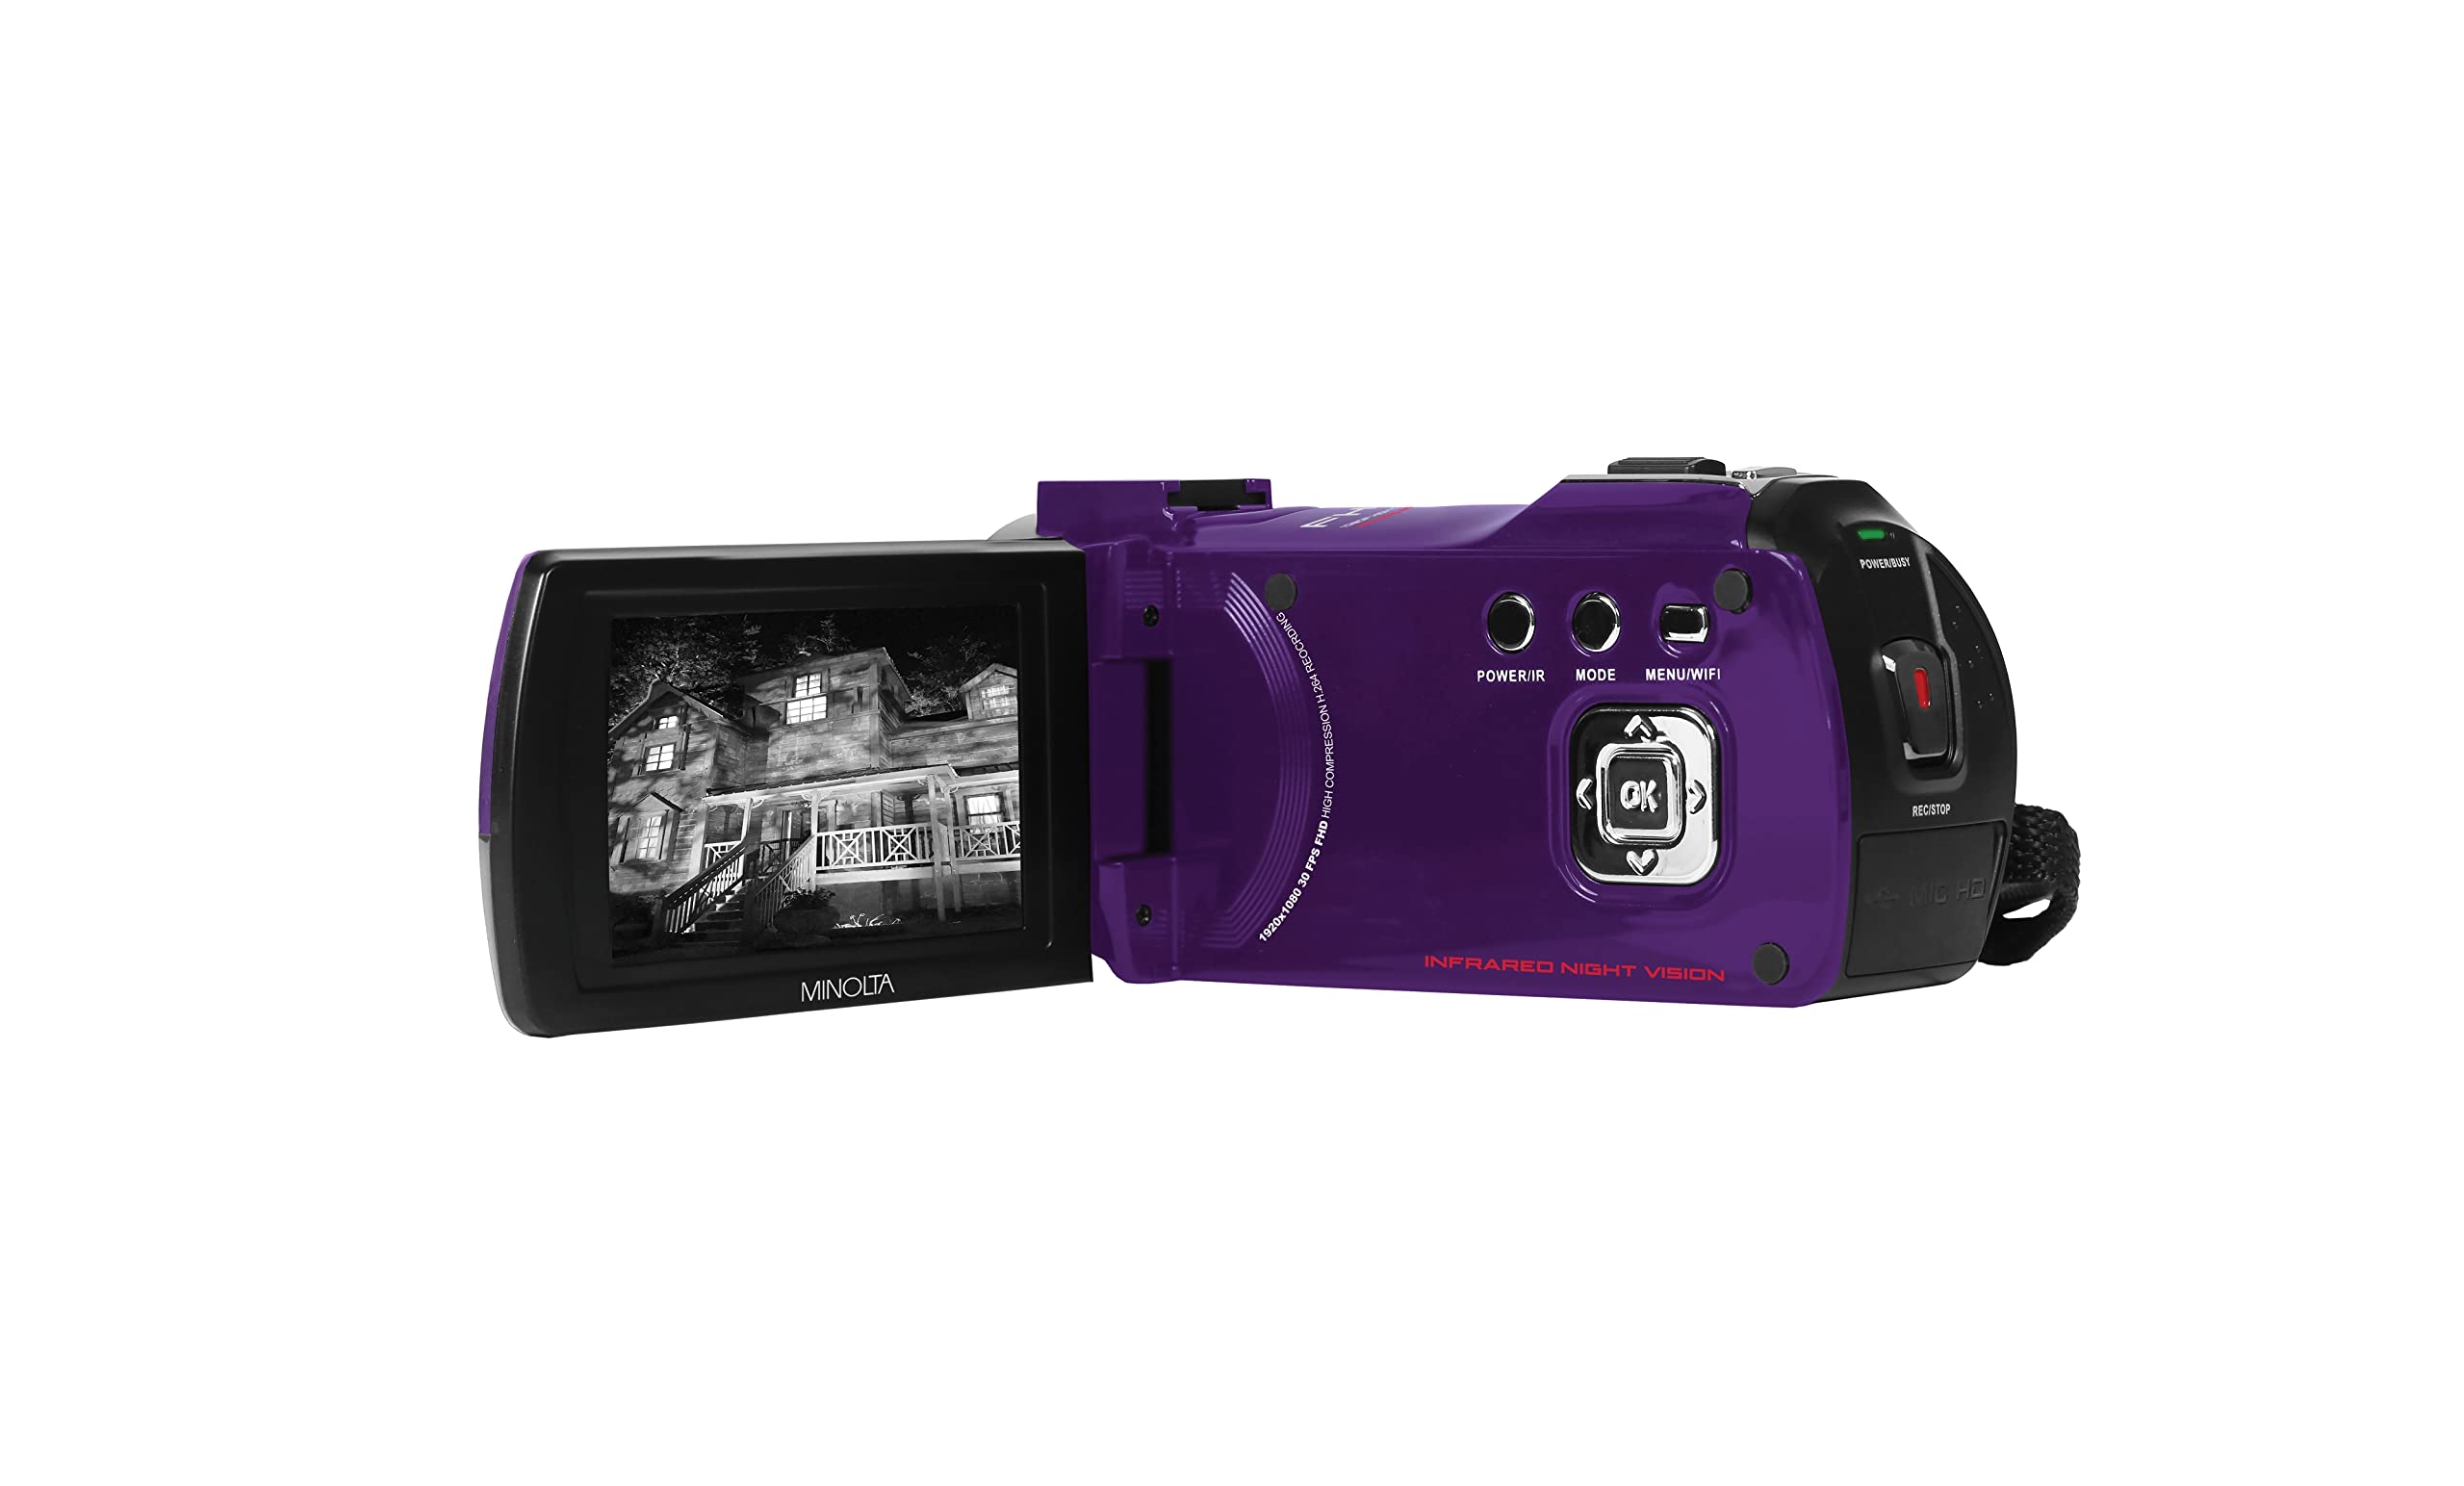 Minolta MN220NV 1080p Full HD 24MP Night Vision Camcorder with WiFi w/32GB Memory Card (Purple)